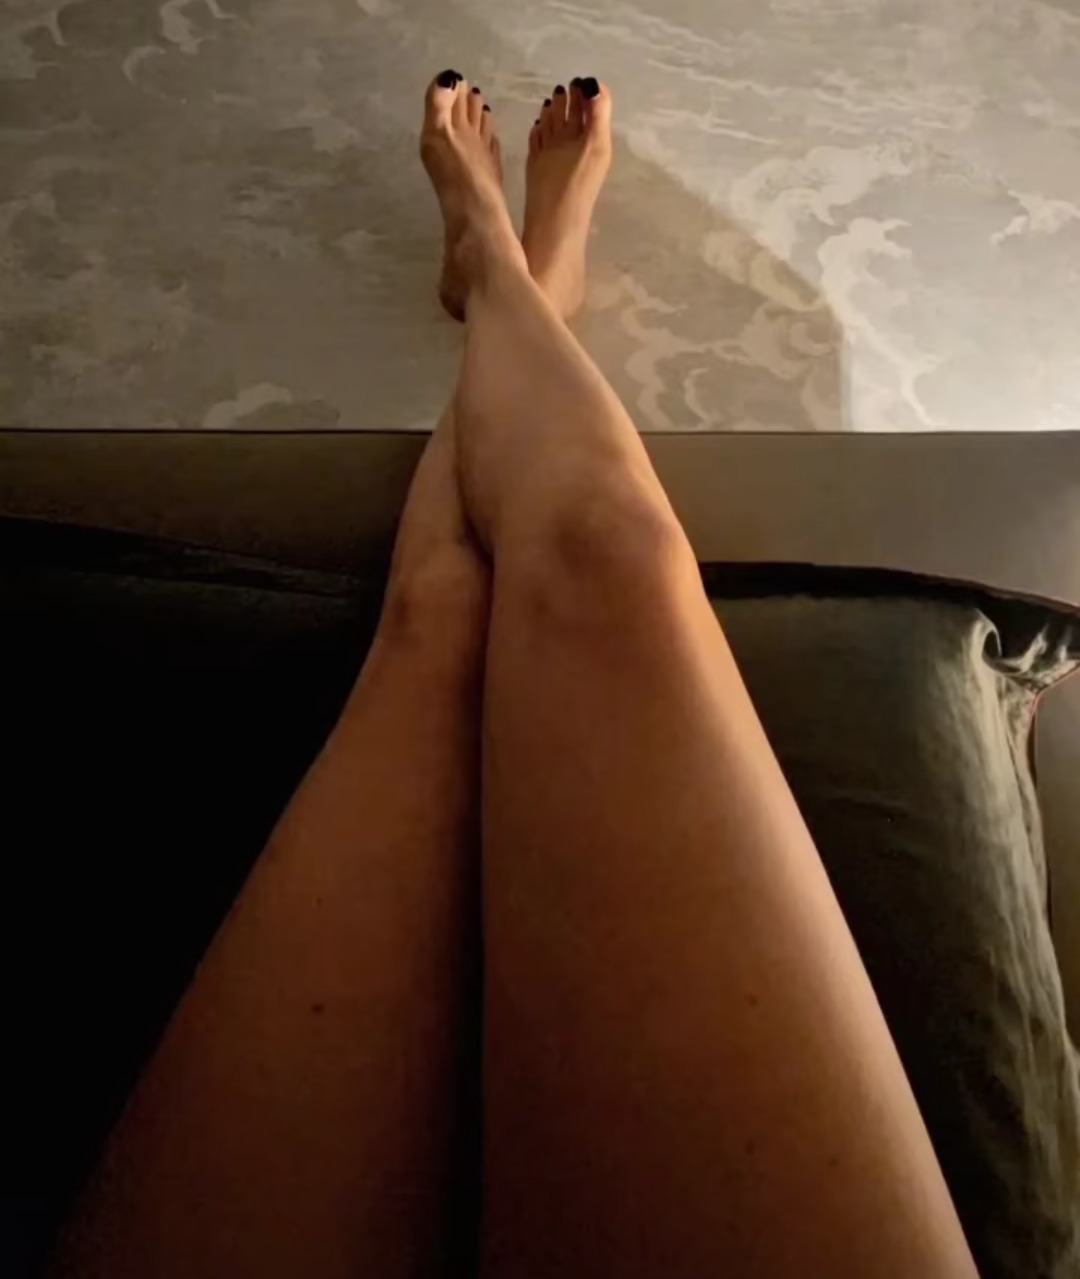 Emma Marrone Feet